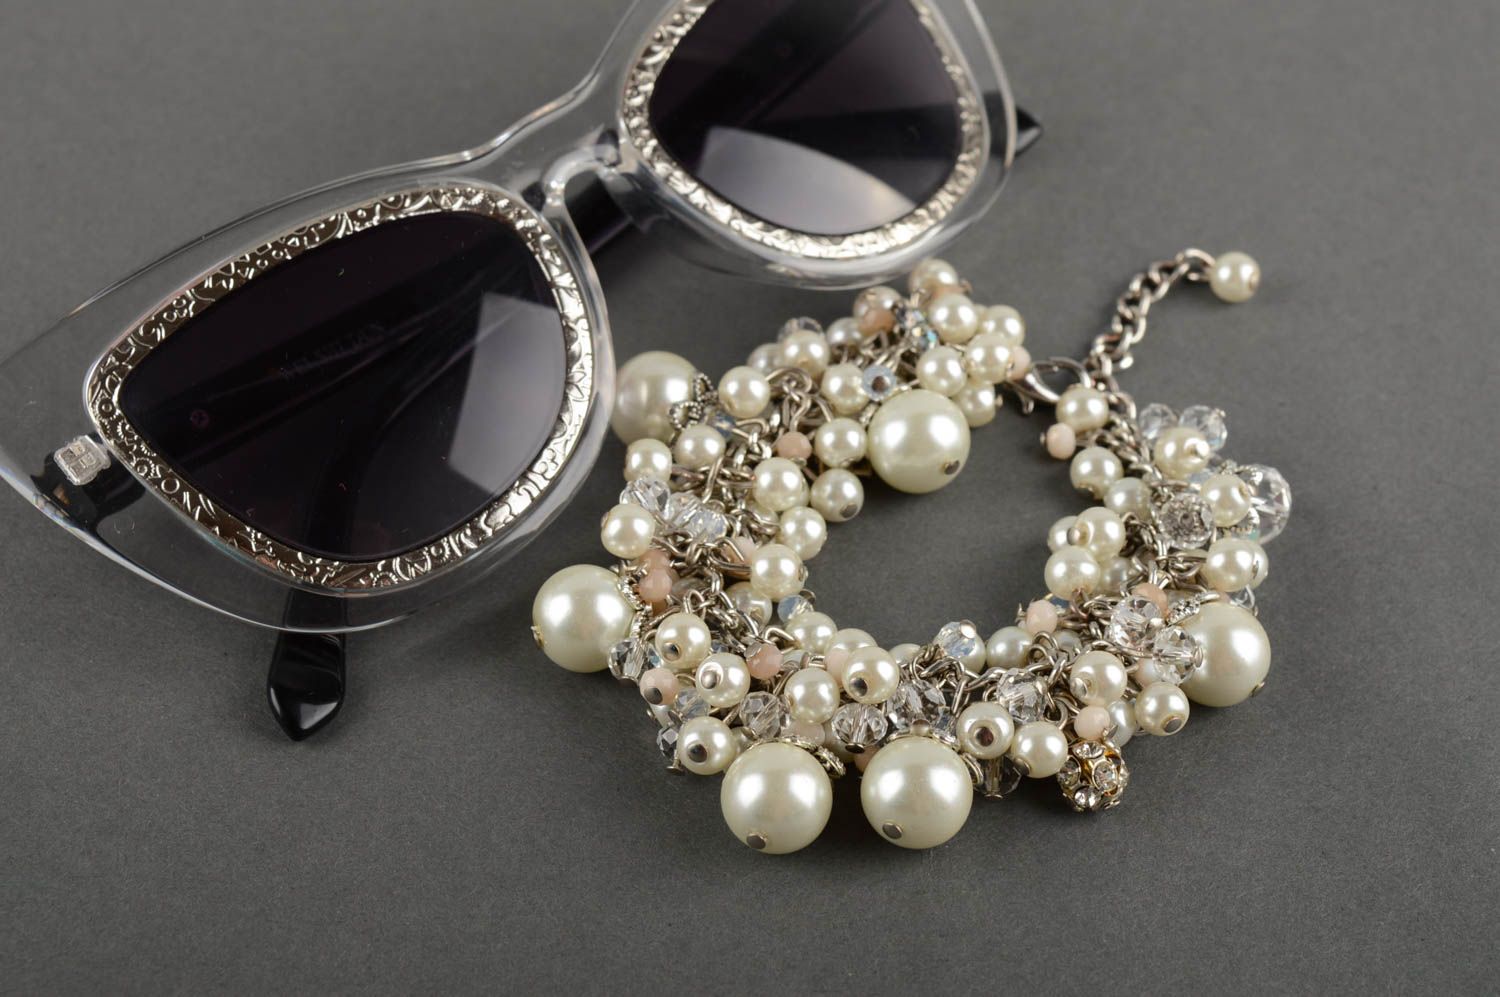 Pearl bracelet handmade jewellery charm bracelet fashion jewelry gifts for her photo 1